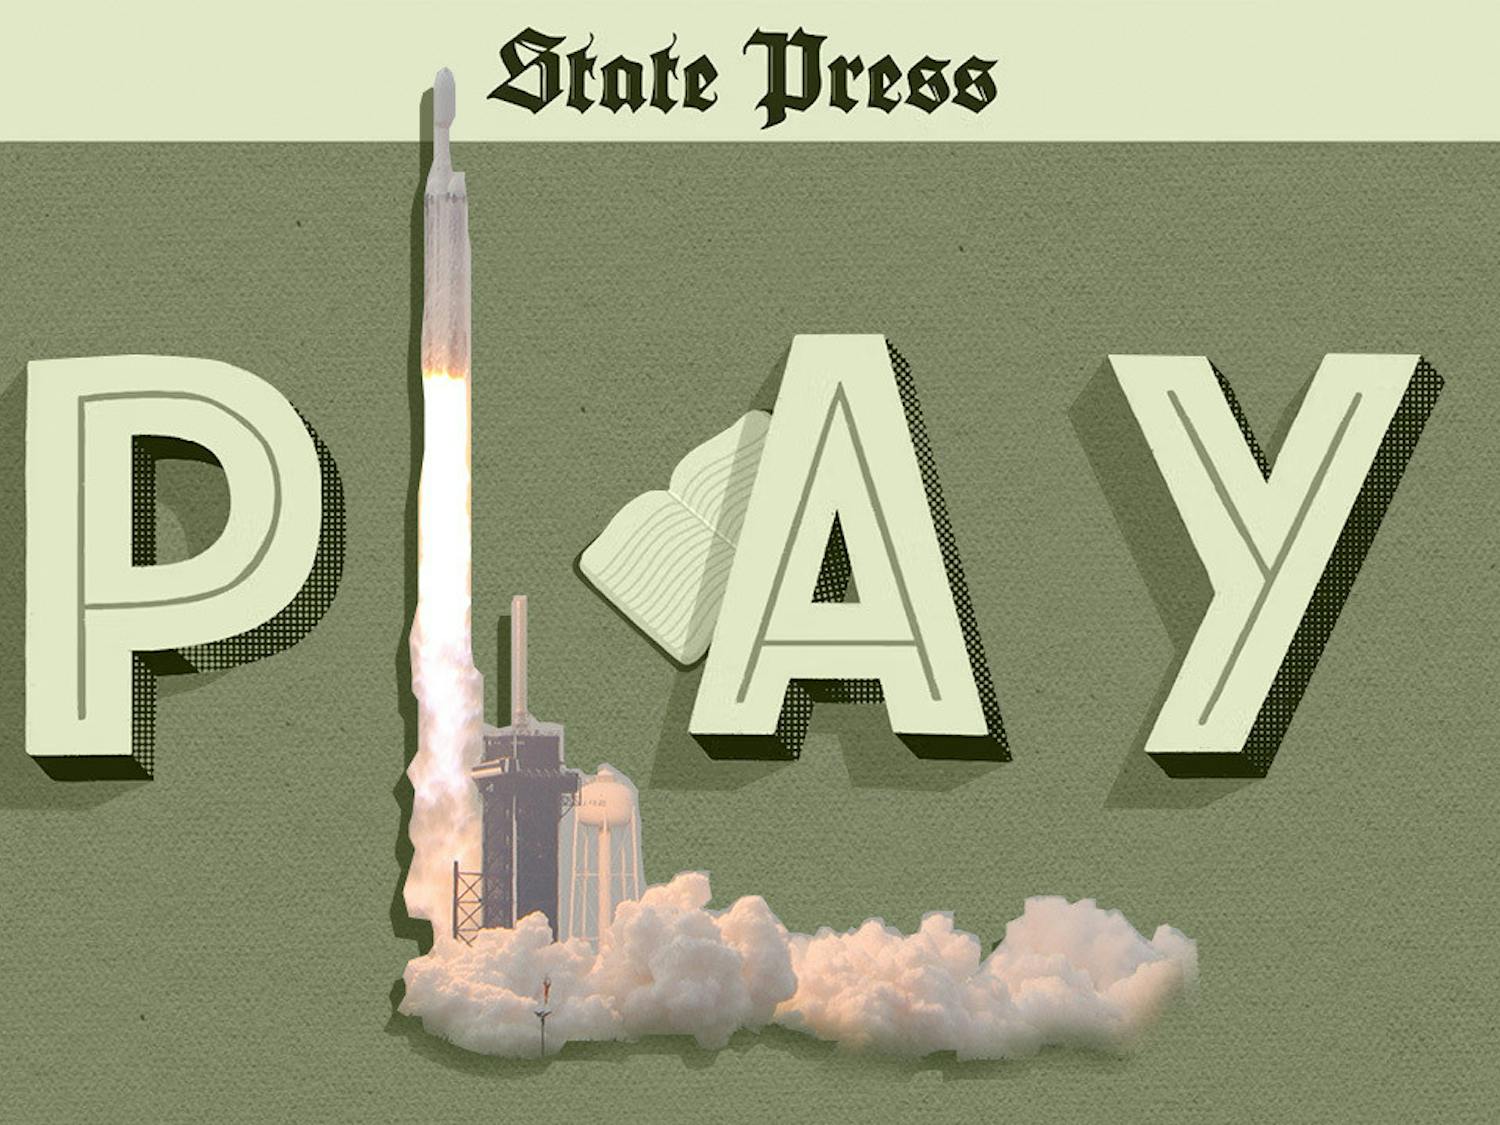 state-press-play-header-space.jpg